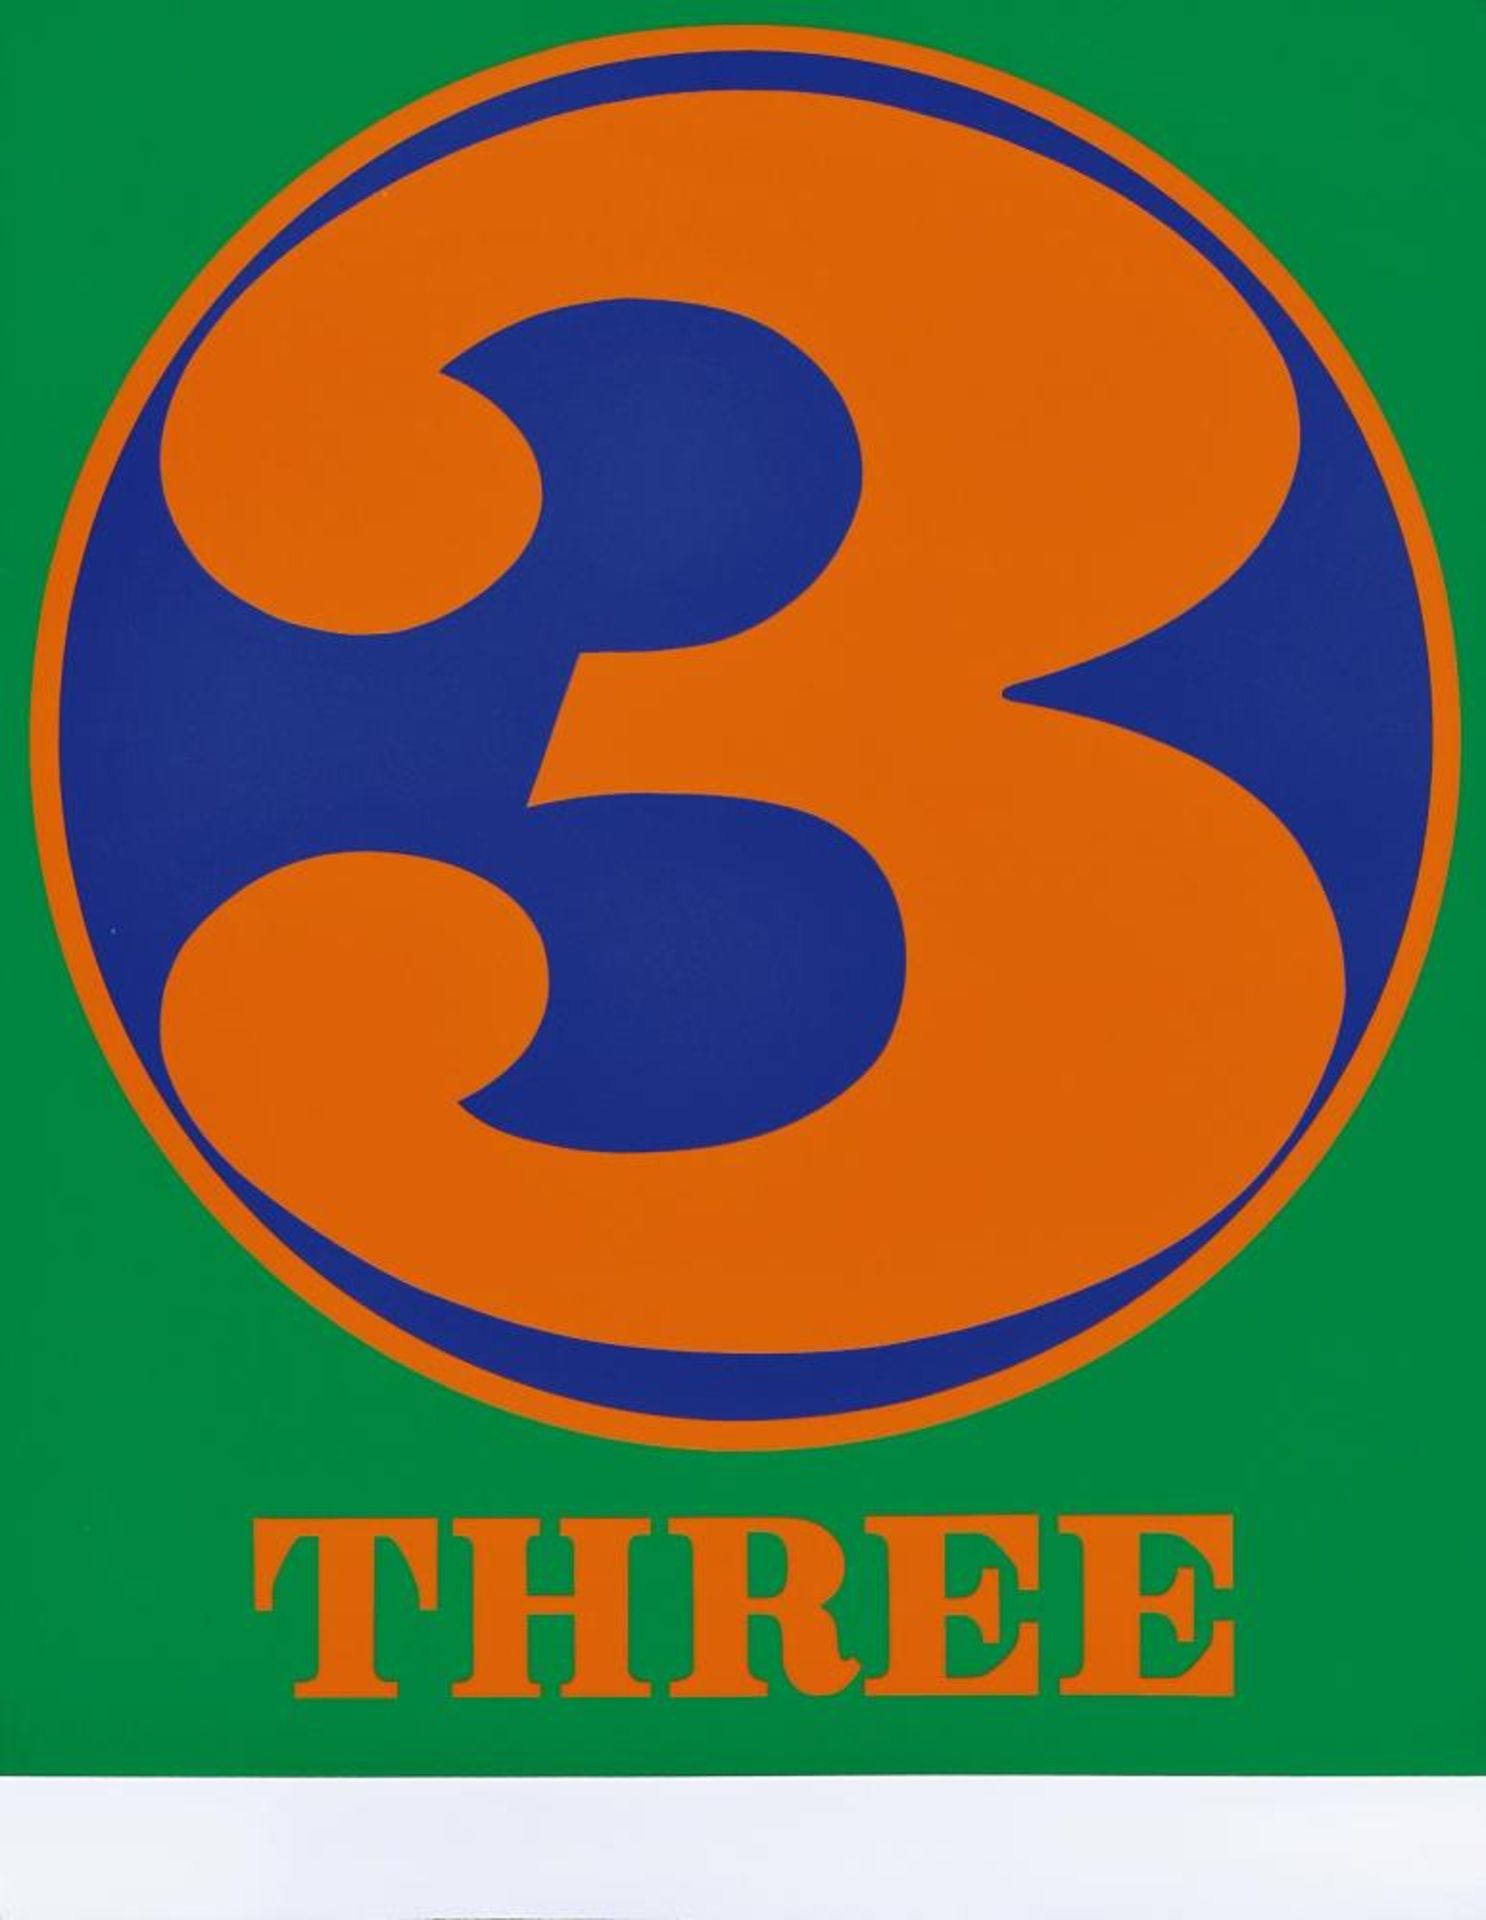 Numbers: Three